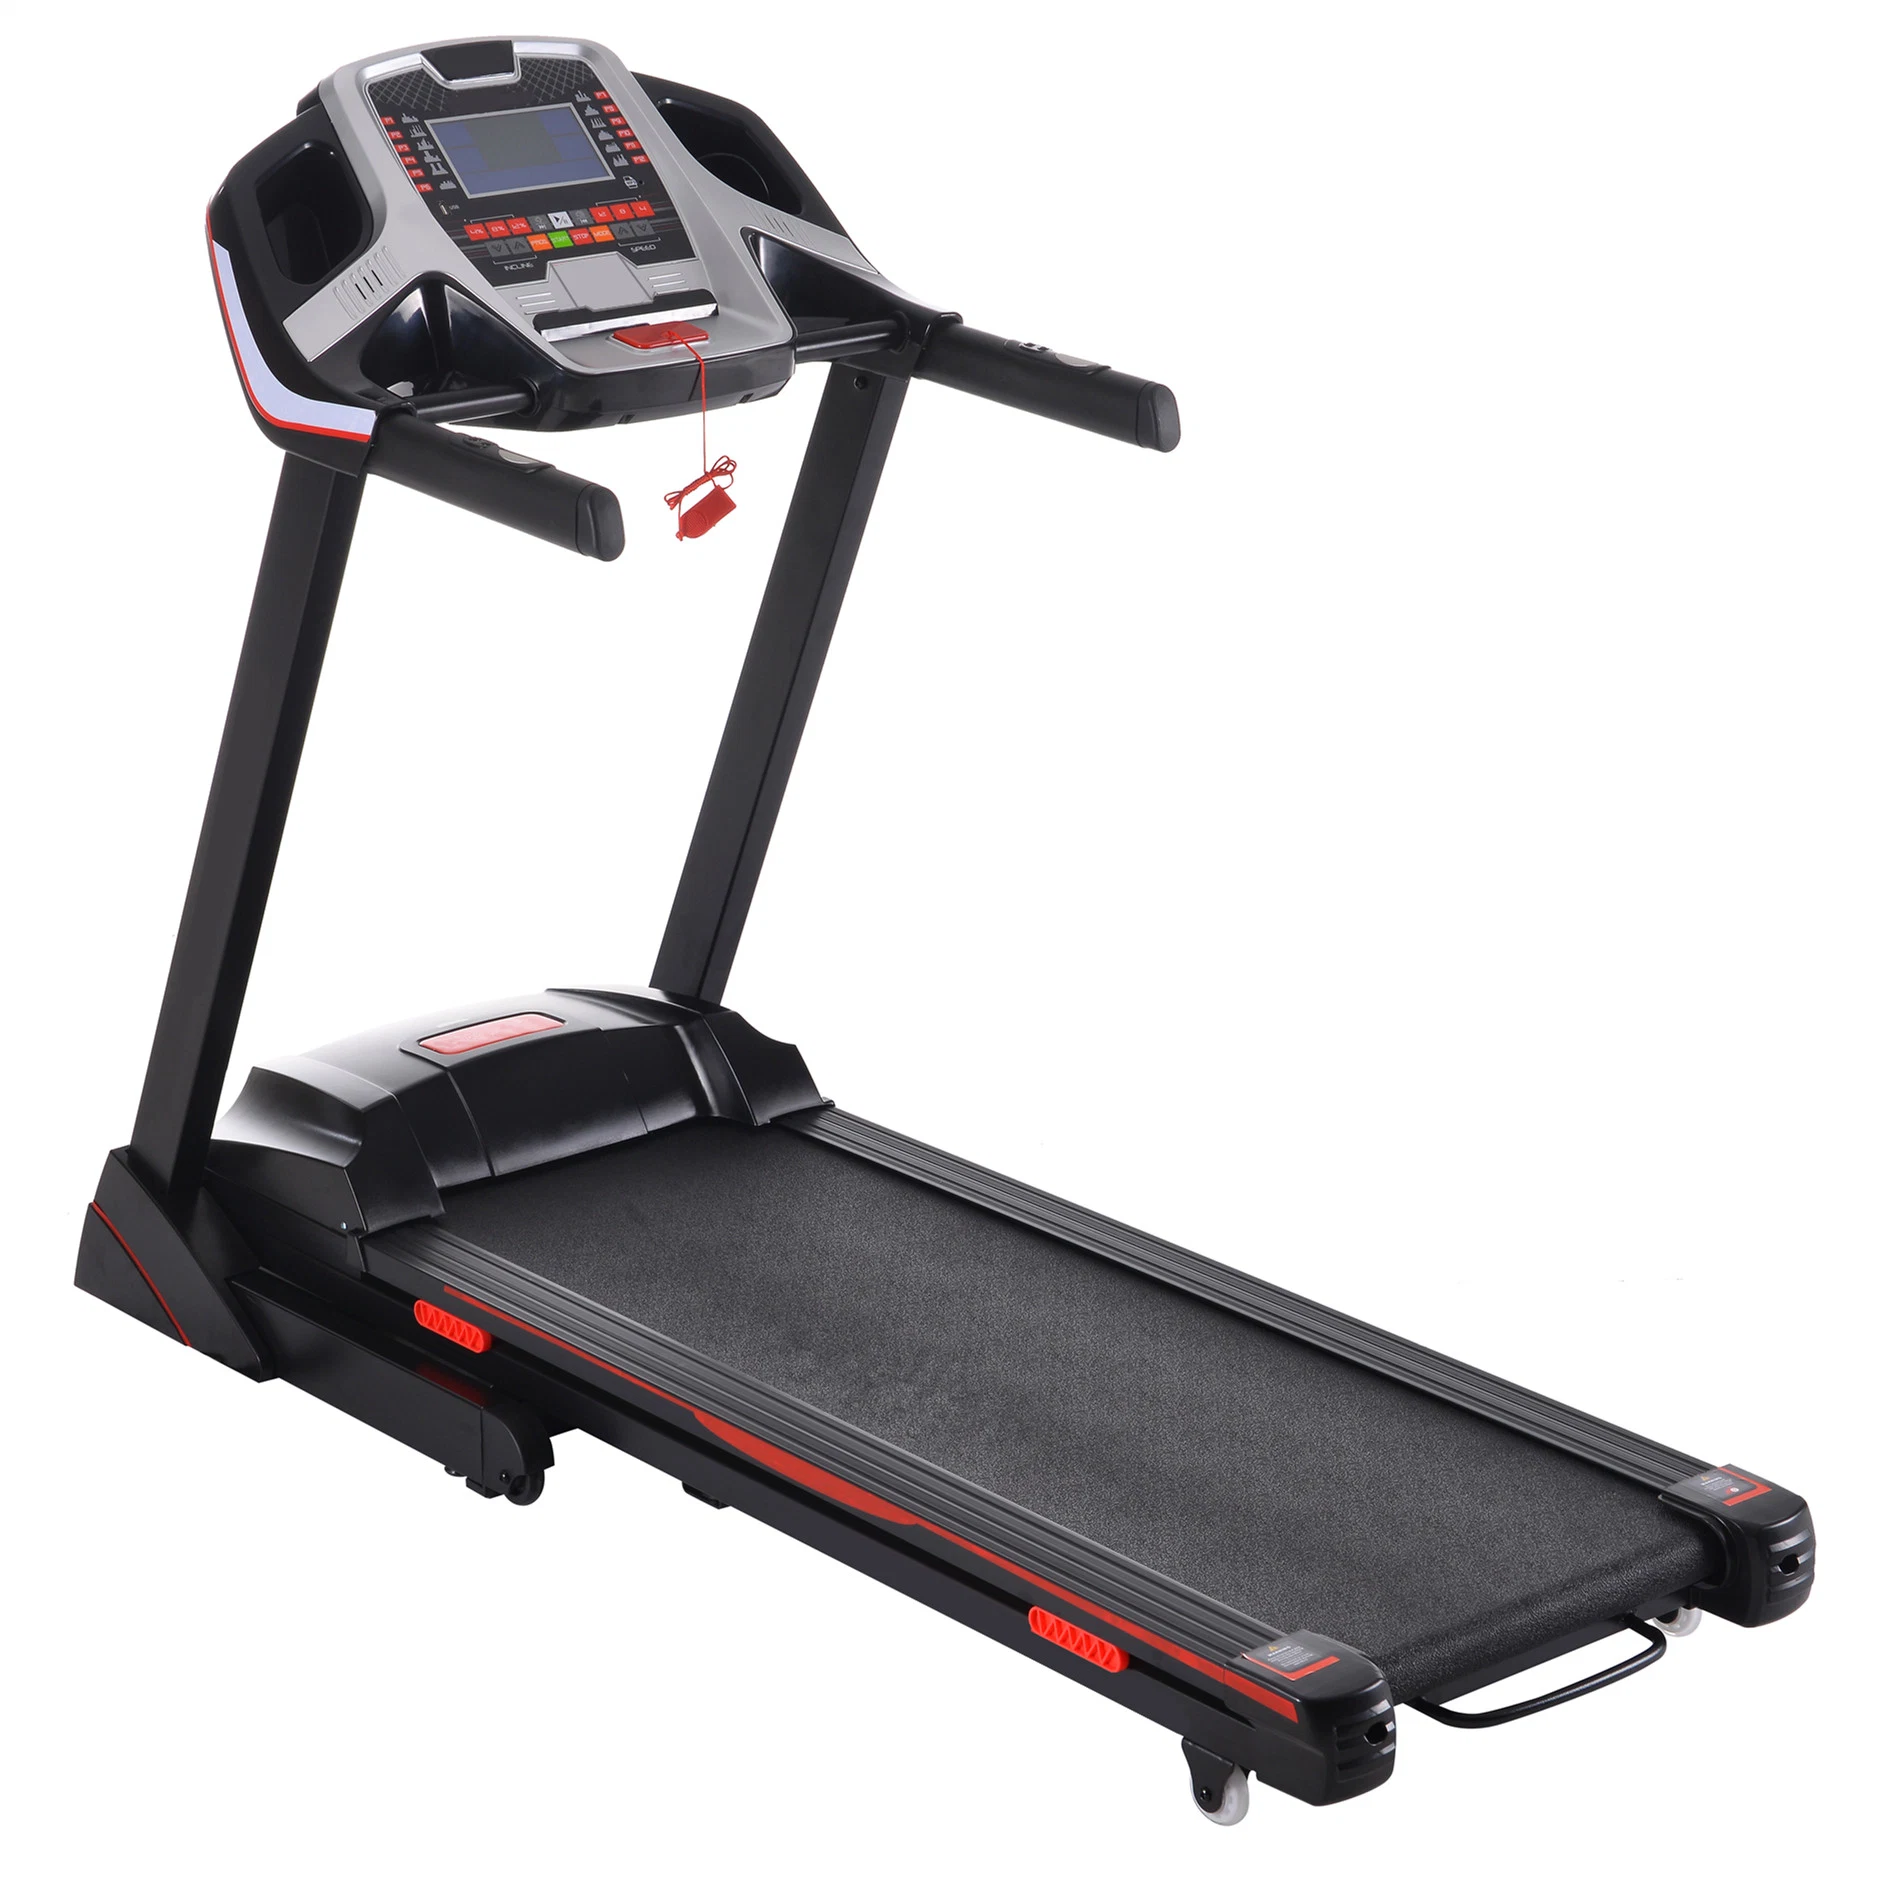 DC Motor Home Treadmill Motorized Fitness Equipment